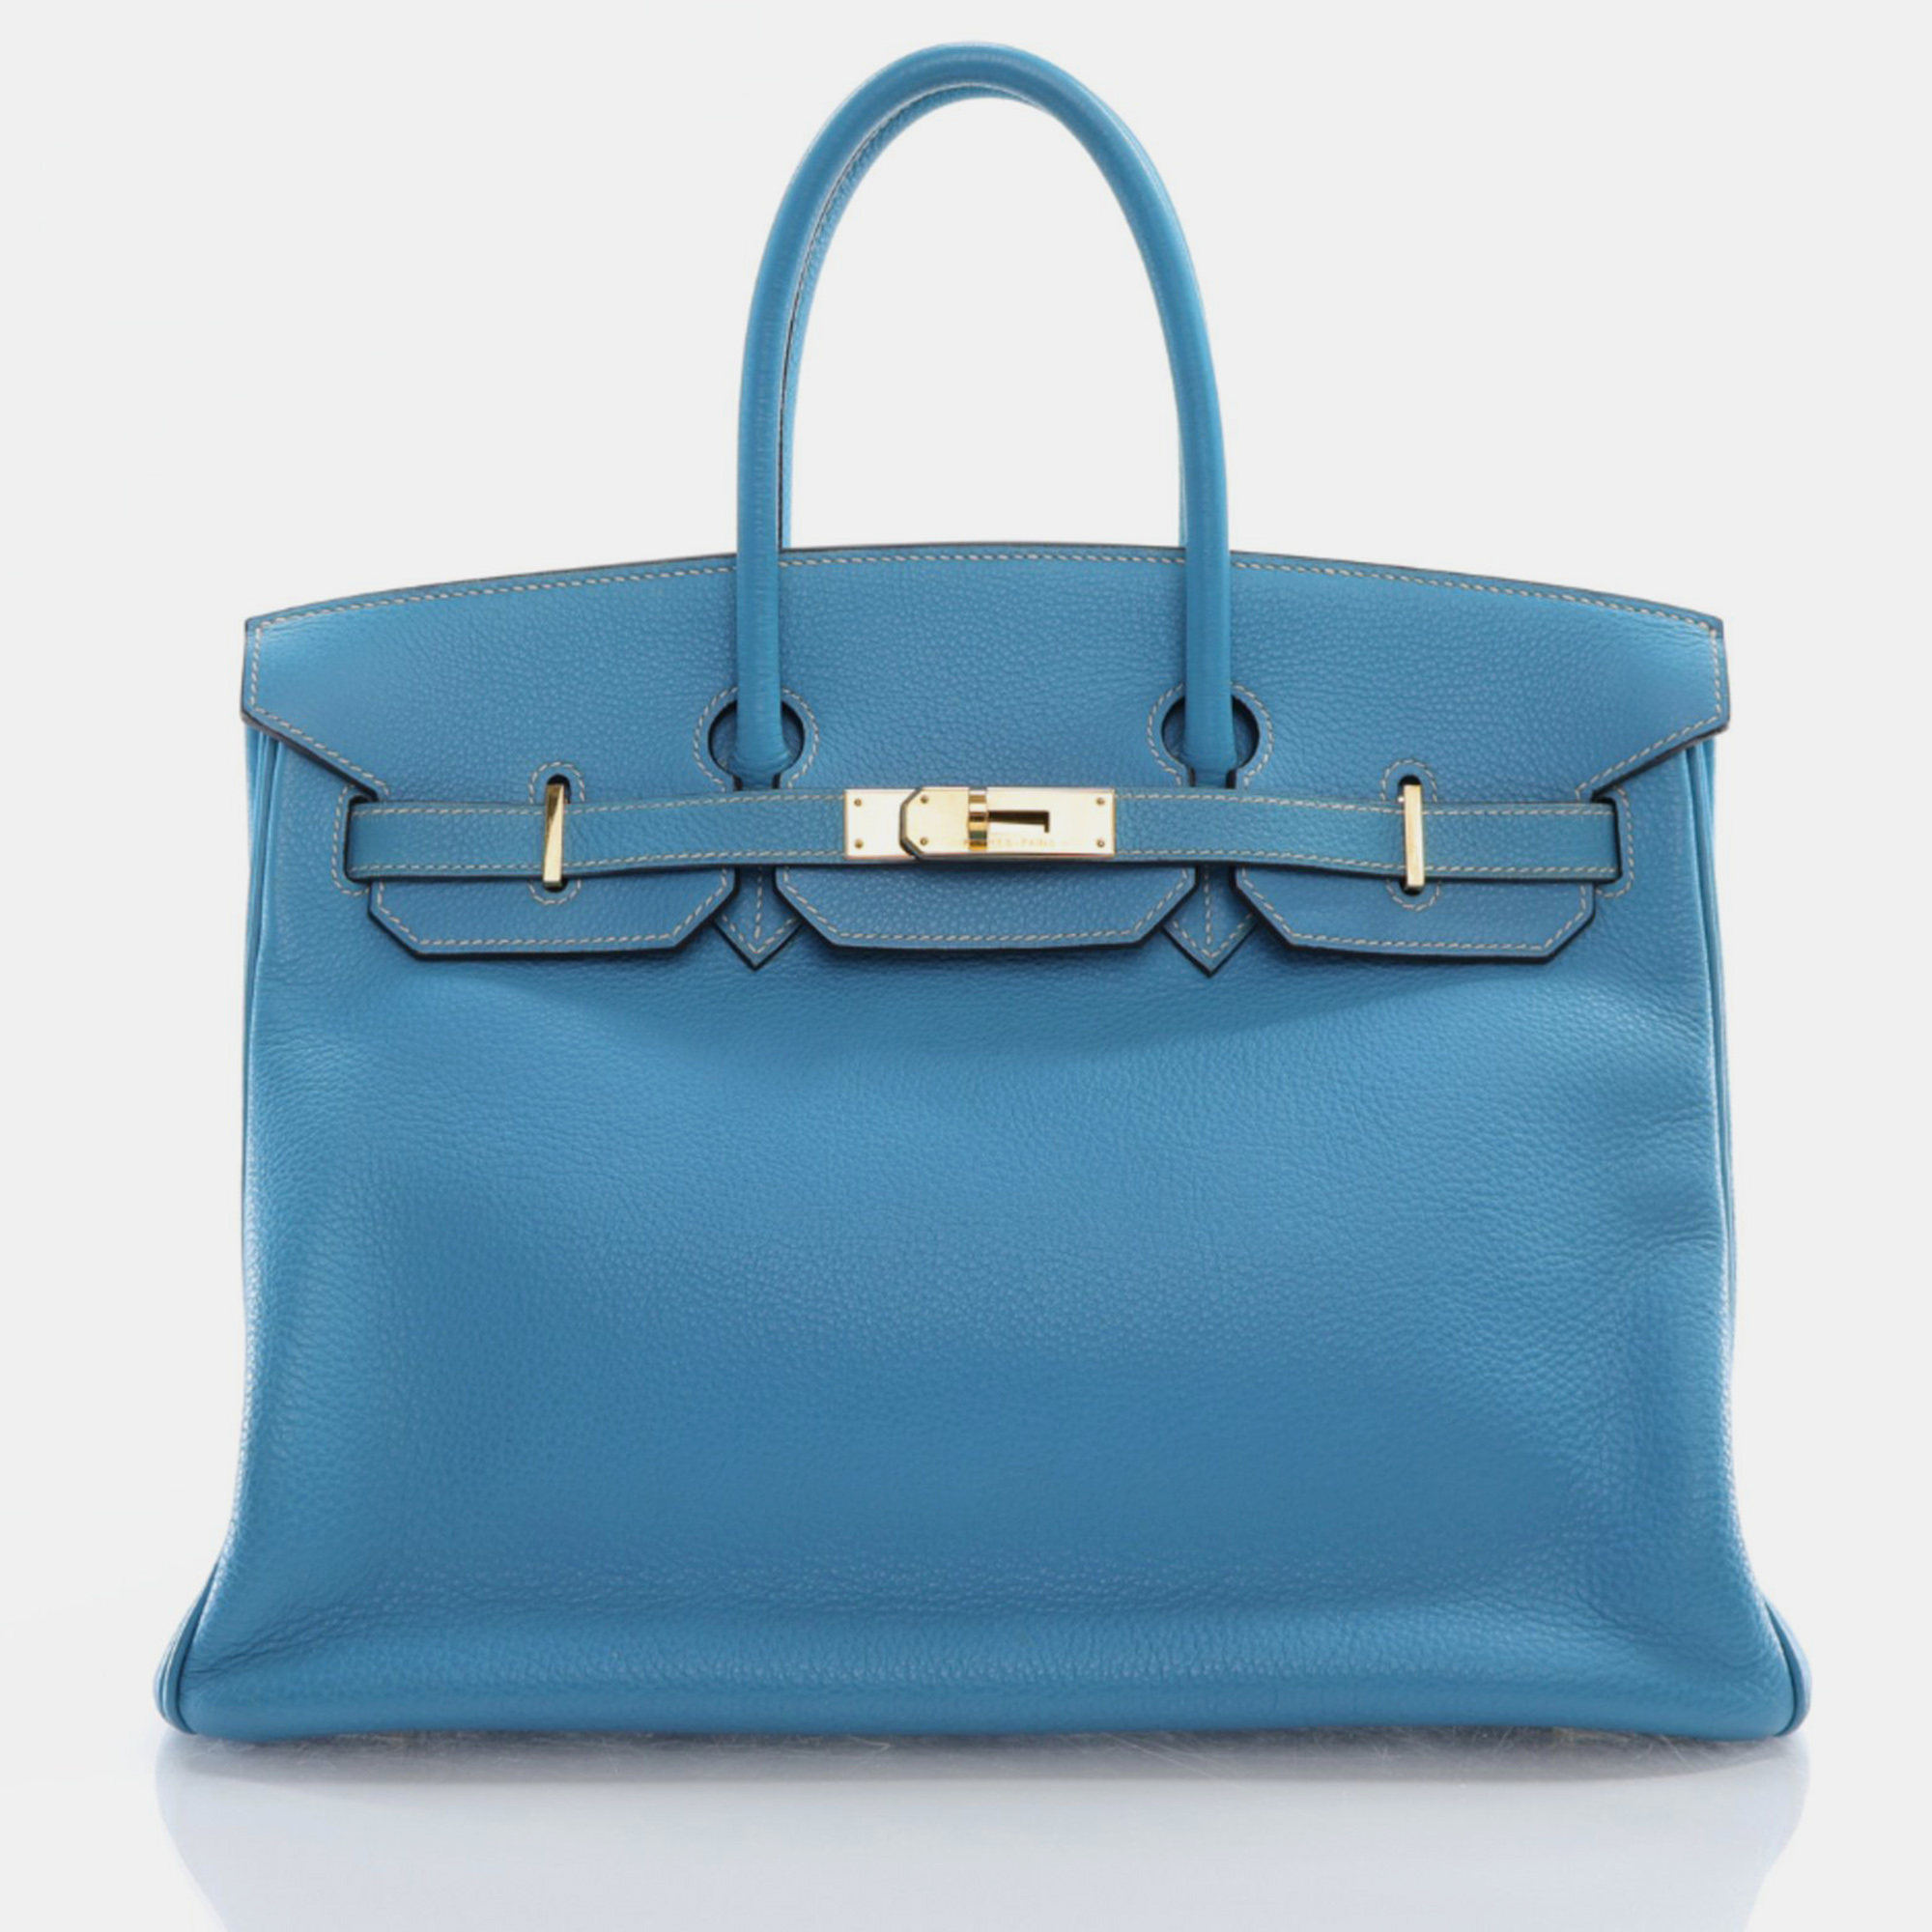 Hermes turquoise togo birkin 35 handbag